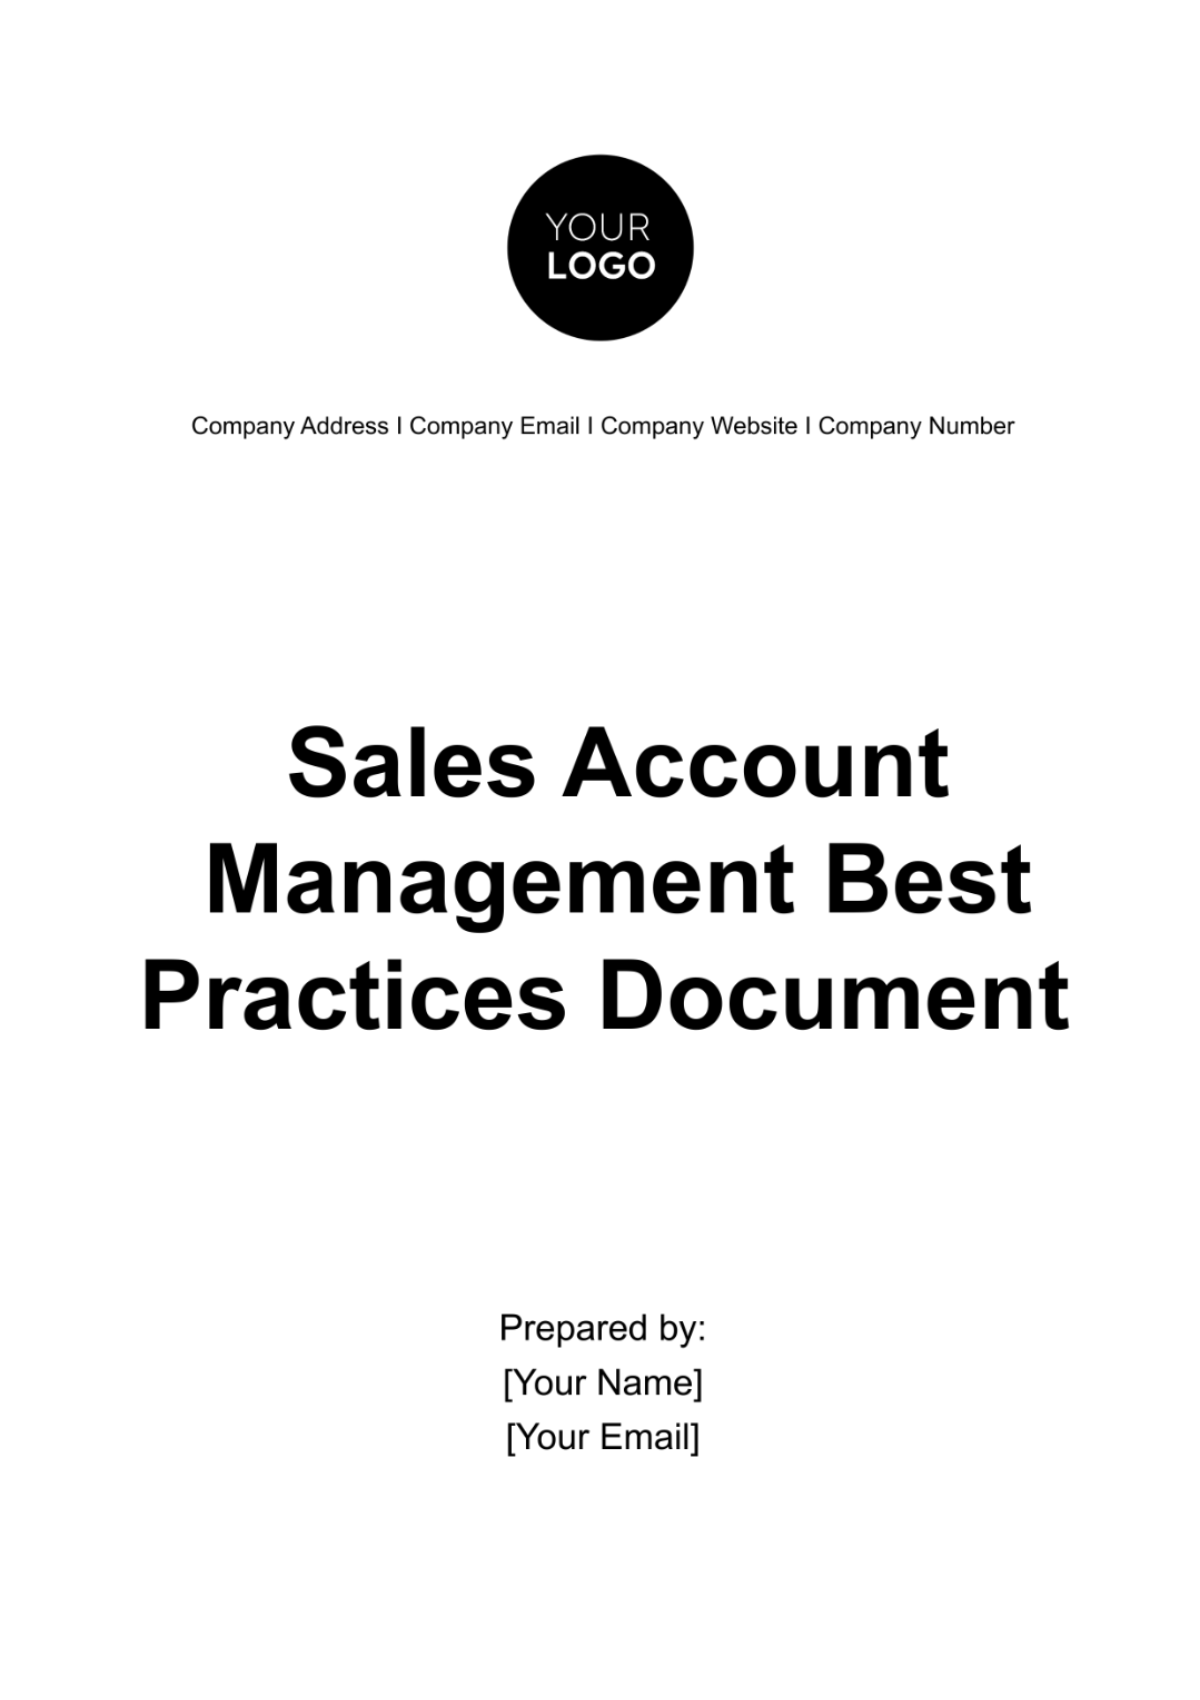 Free Sales Account Management Best Practices Document Template